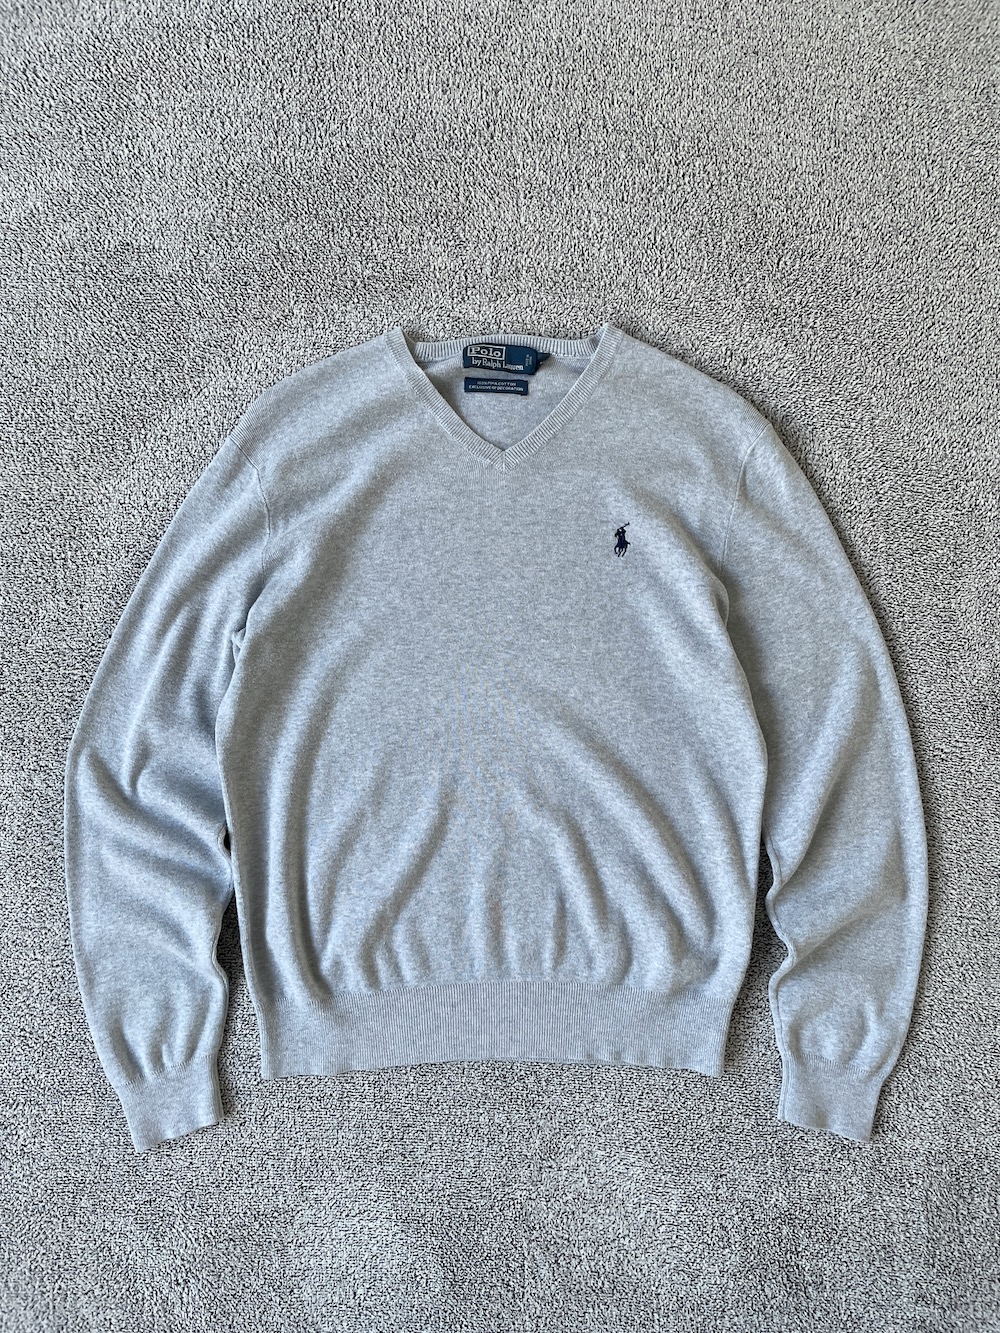 [ S ] Polo Ralph Lauren Sweater (6428)